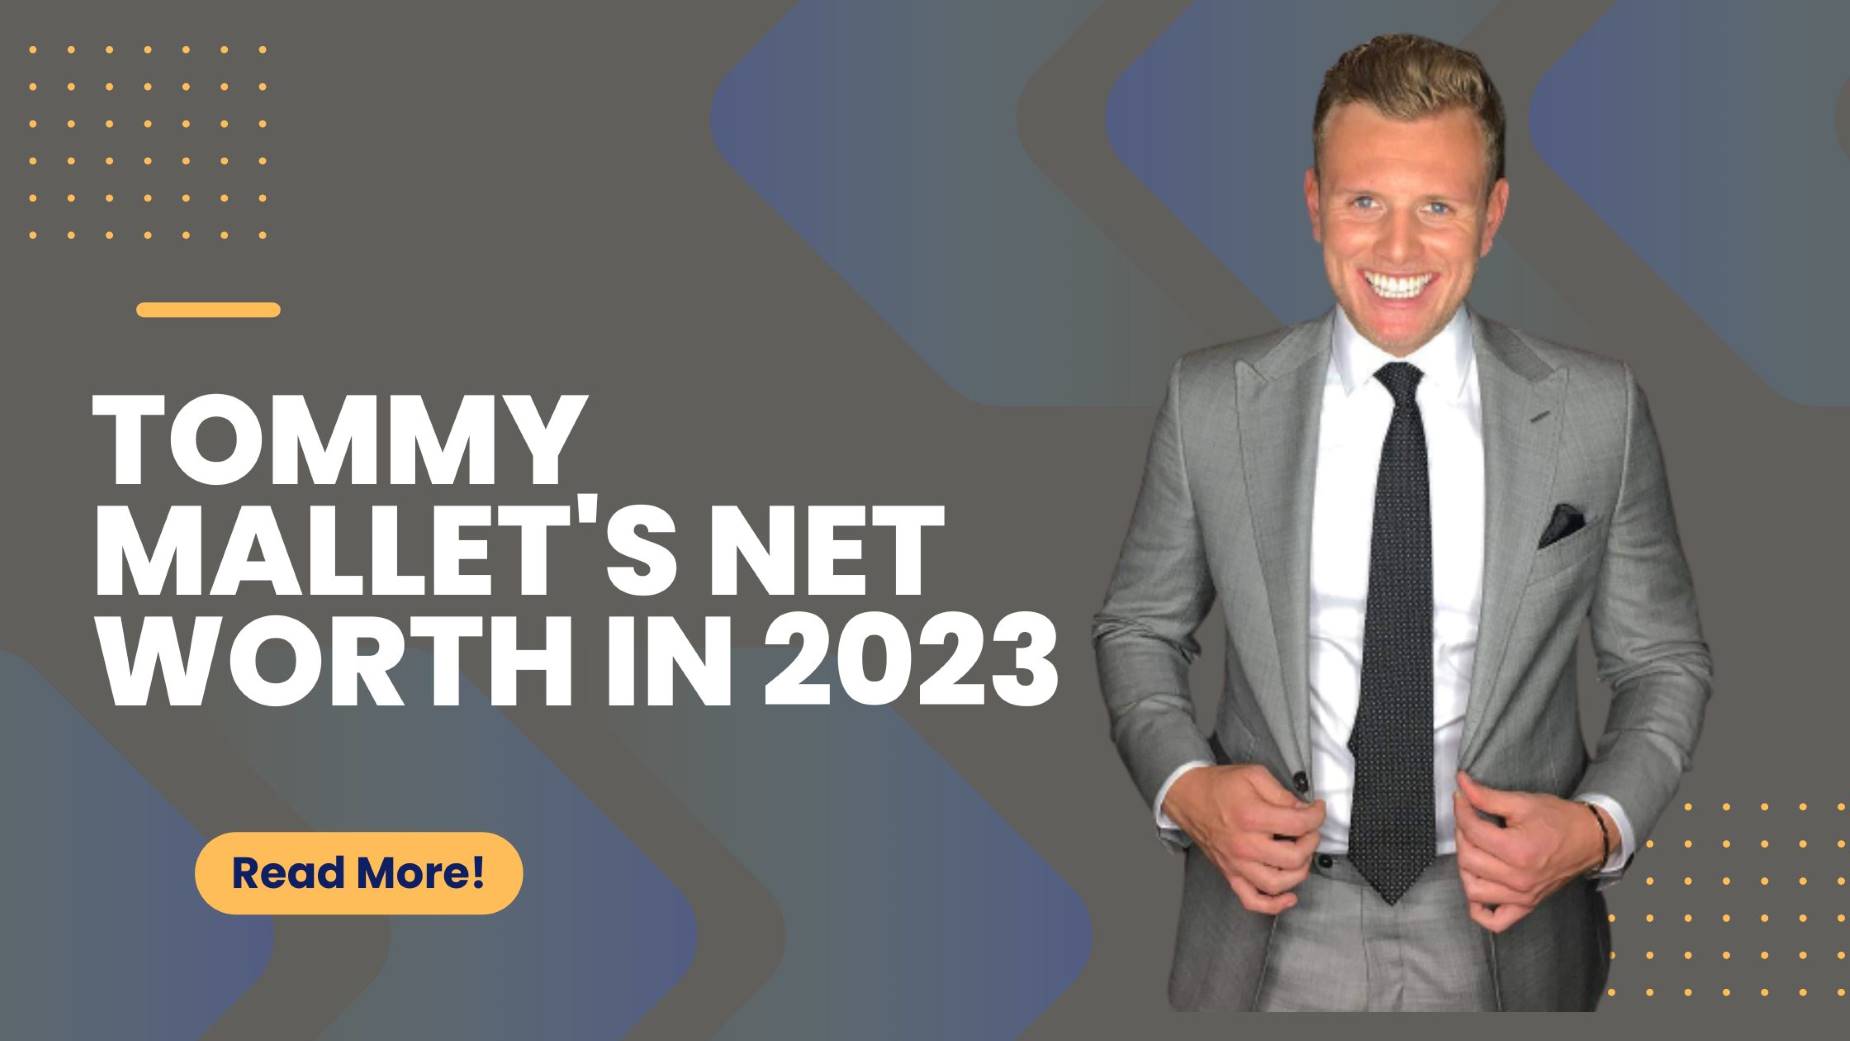 Tommy Mallet's Net Worth In 2023